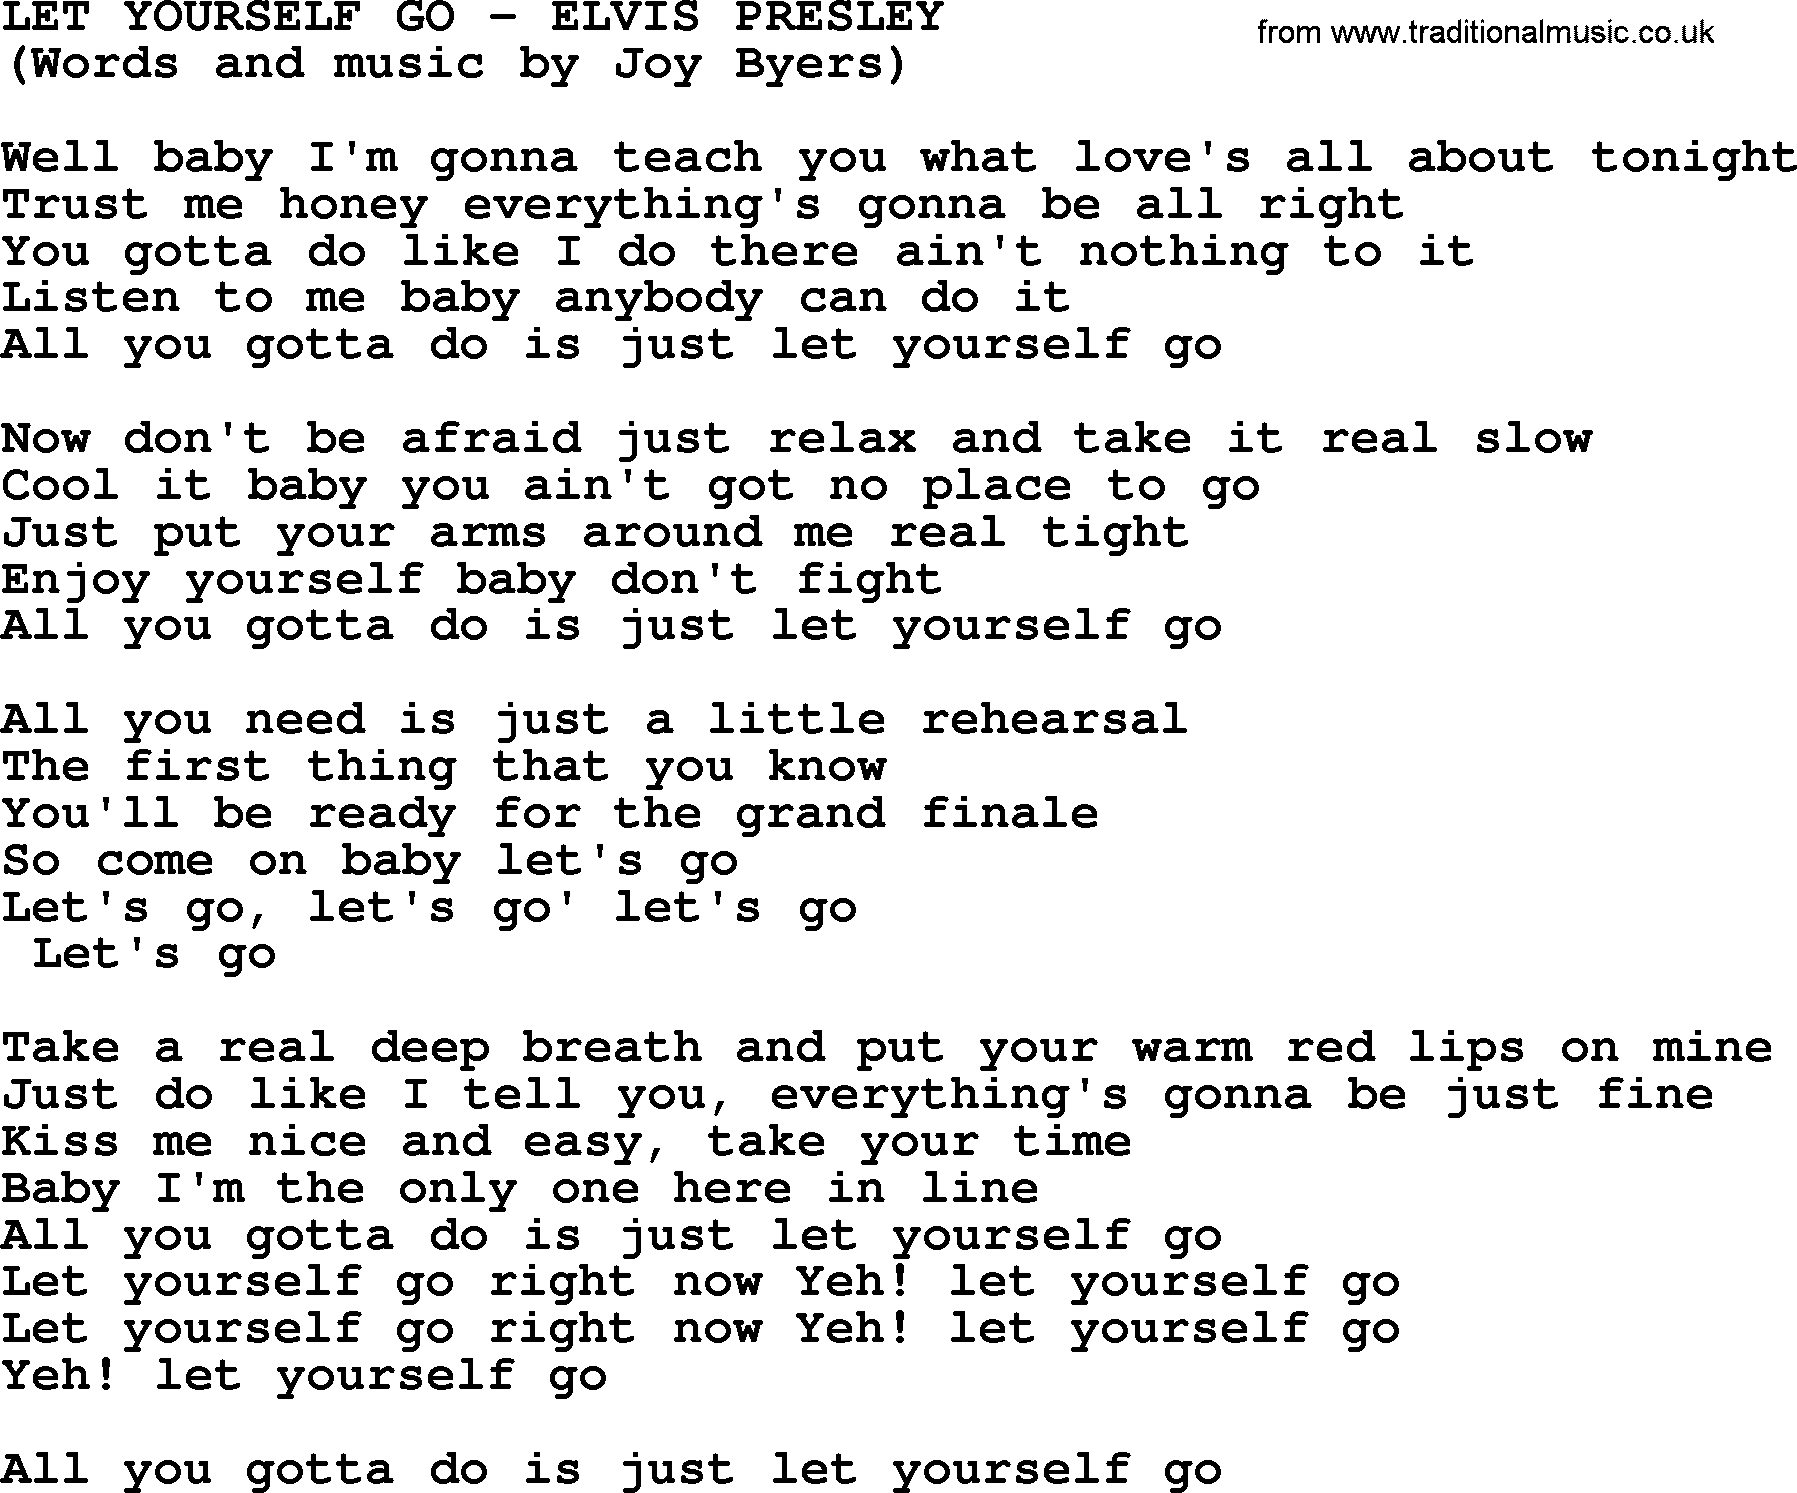 Elvis Presley song: Let Yourself Go lyrics